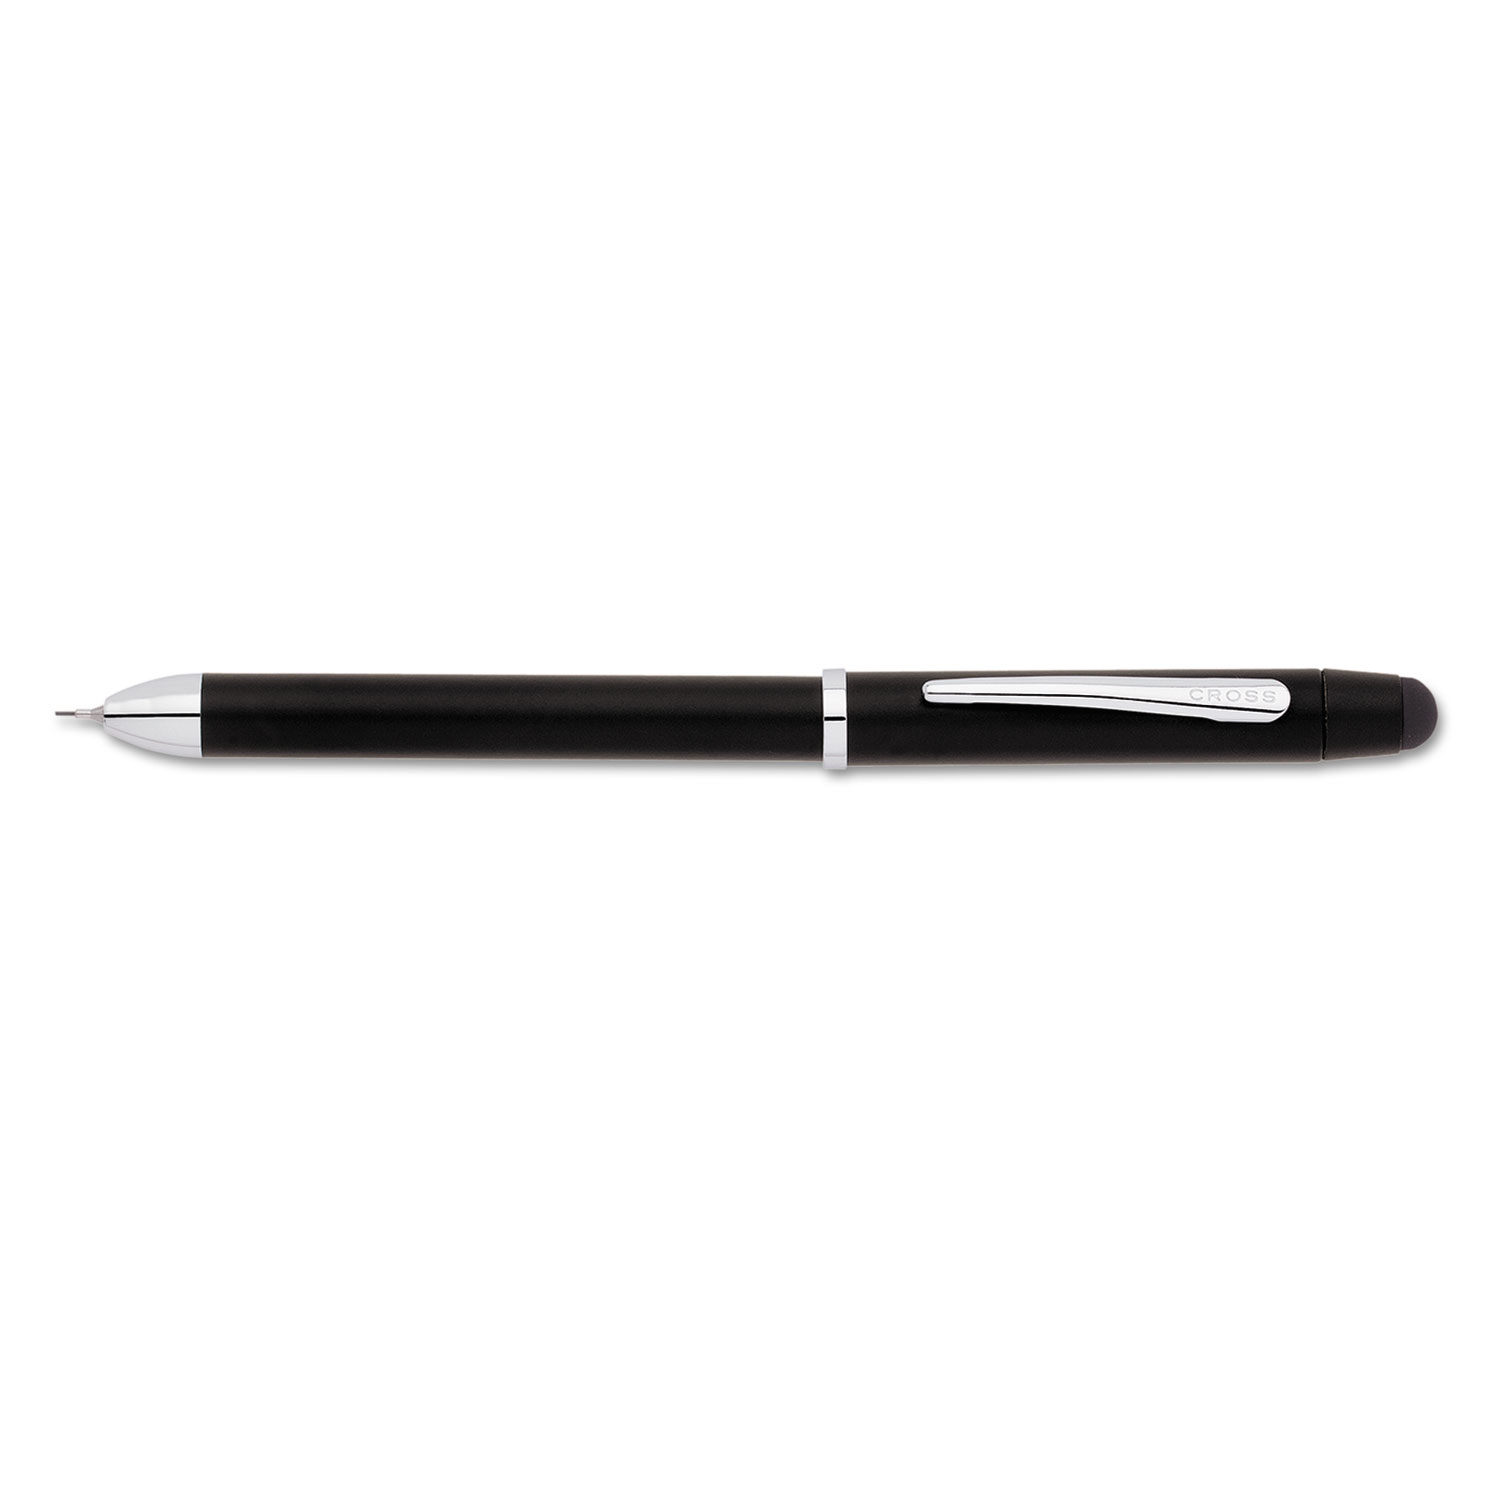  Cross AT0090-3 Tech3+ Retractable Ballpoint Pen/Stylus, 1mm, Black/Red Ink, Black/Chrome Barrel (CROAT00903) 